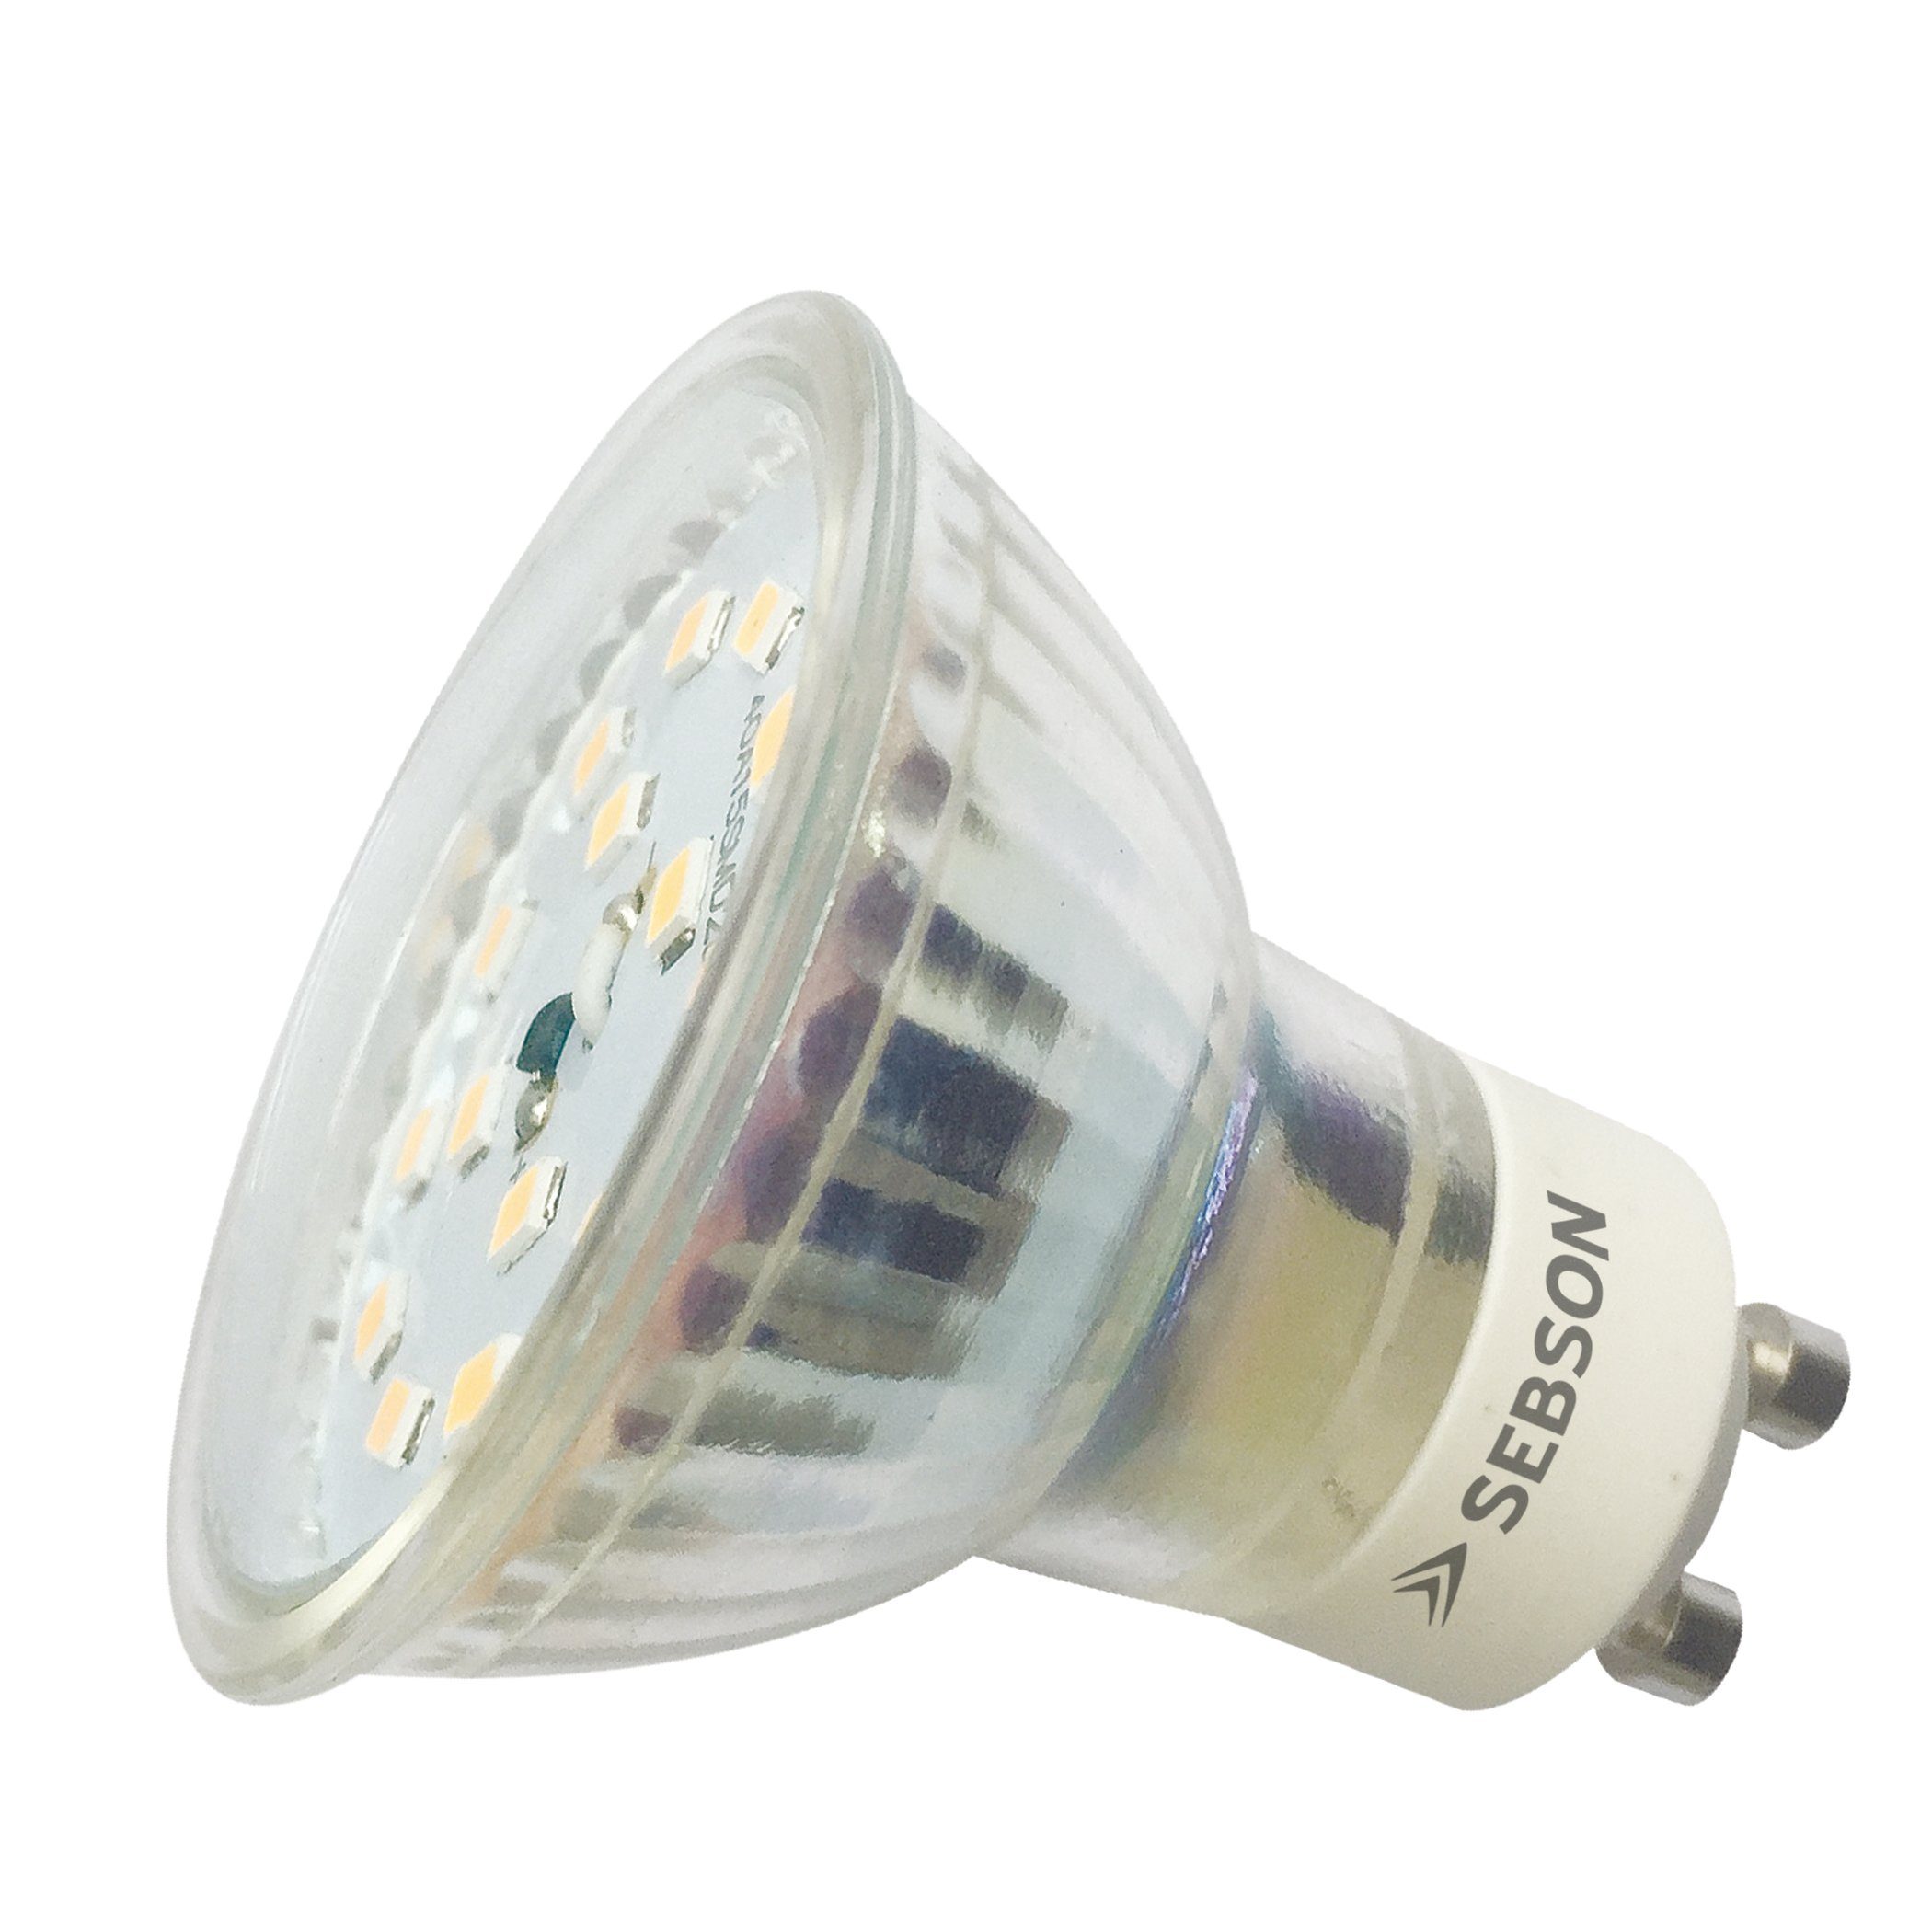 SEBSON »Ra 95 Serie + flimmerfrei, GU10 LED Lampe 5W dimmbar warmweiß  350lm, 3000K, 230V LED Leuchtmittel« LED-Leuchtmittel